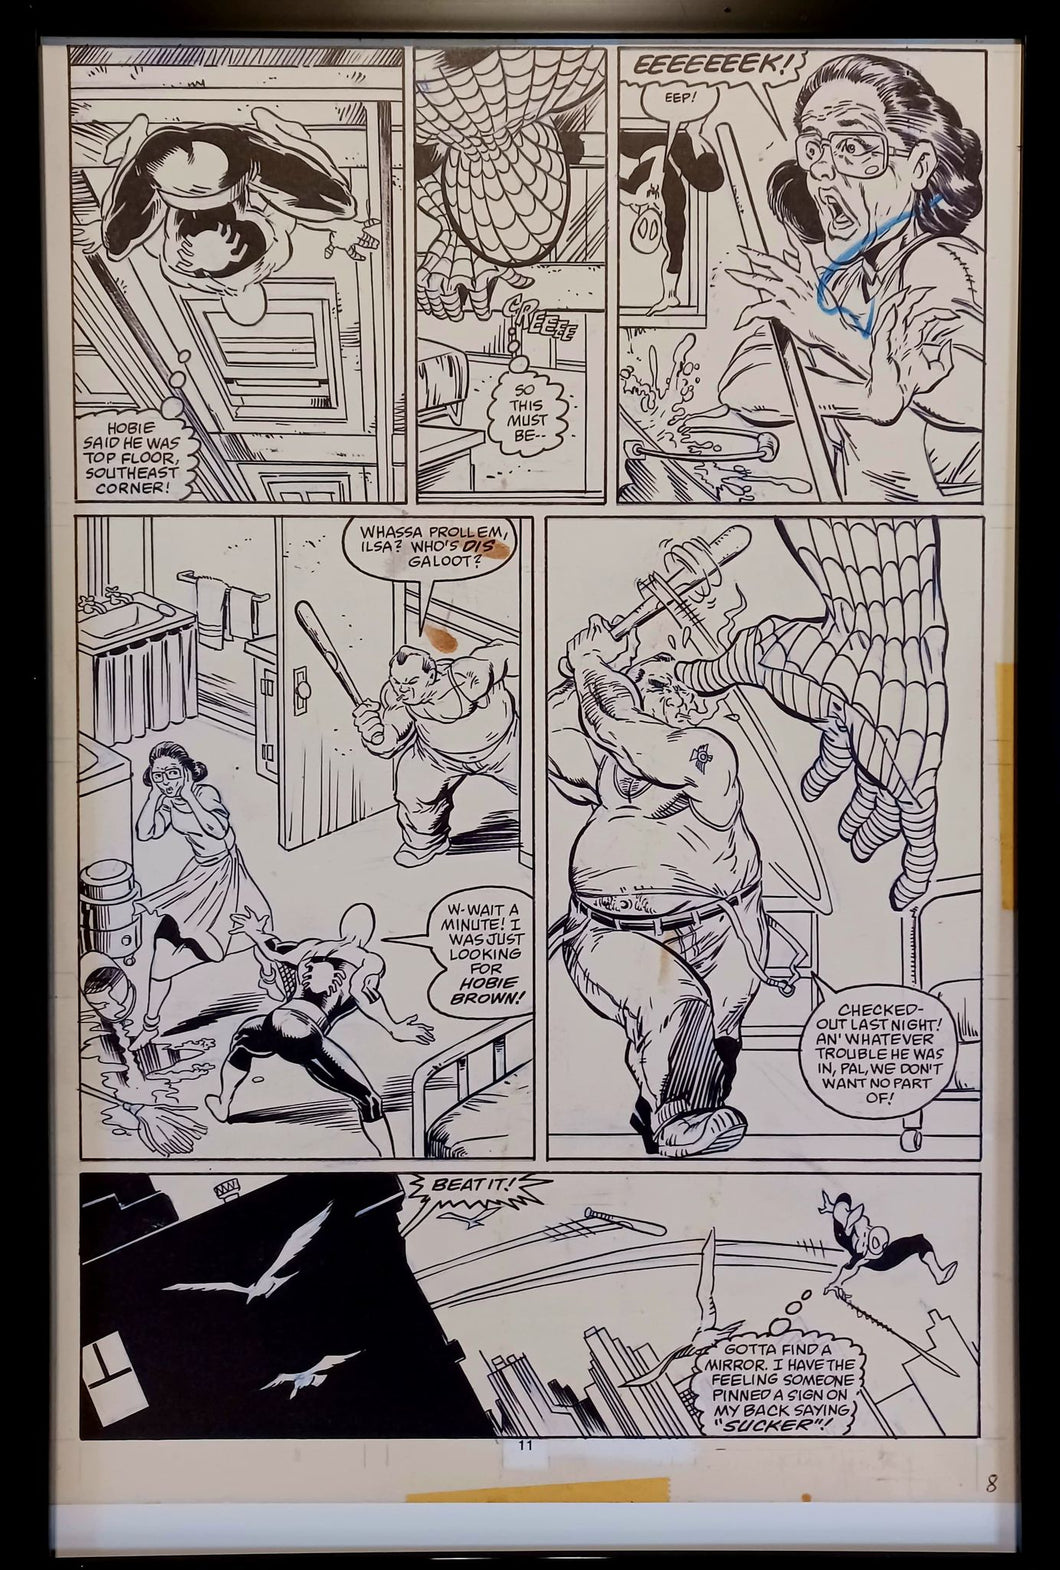 Amazing Spider-Man #305 pg. 8 by Todd McFarlane 11x17 FRAMED Original Art Print Comic Poster